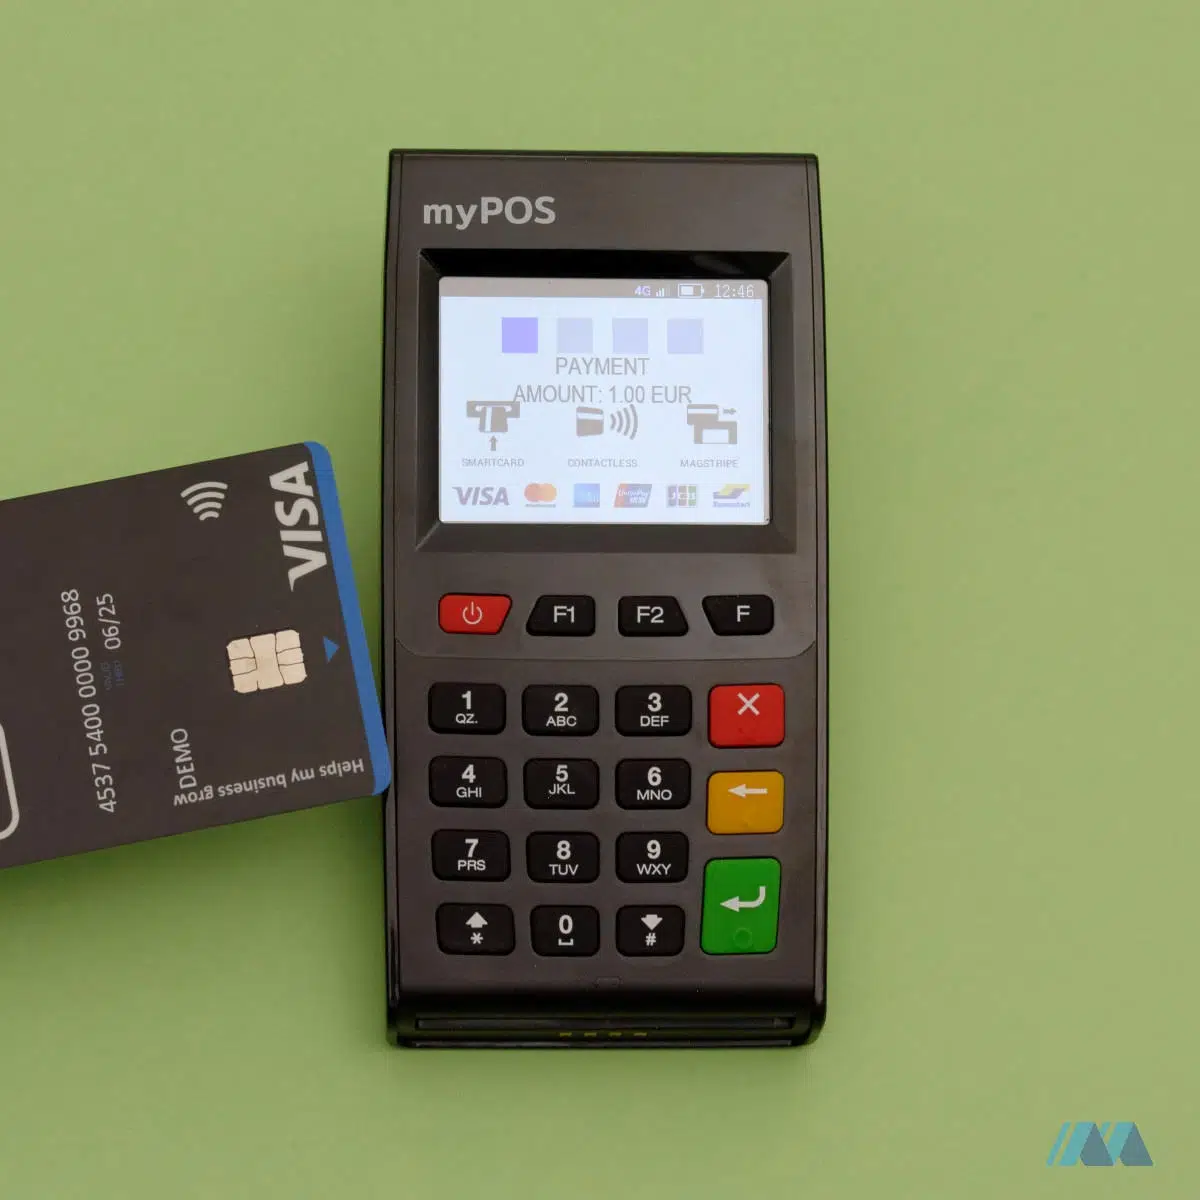 myPOS Go Visa card tap